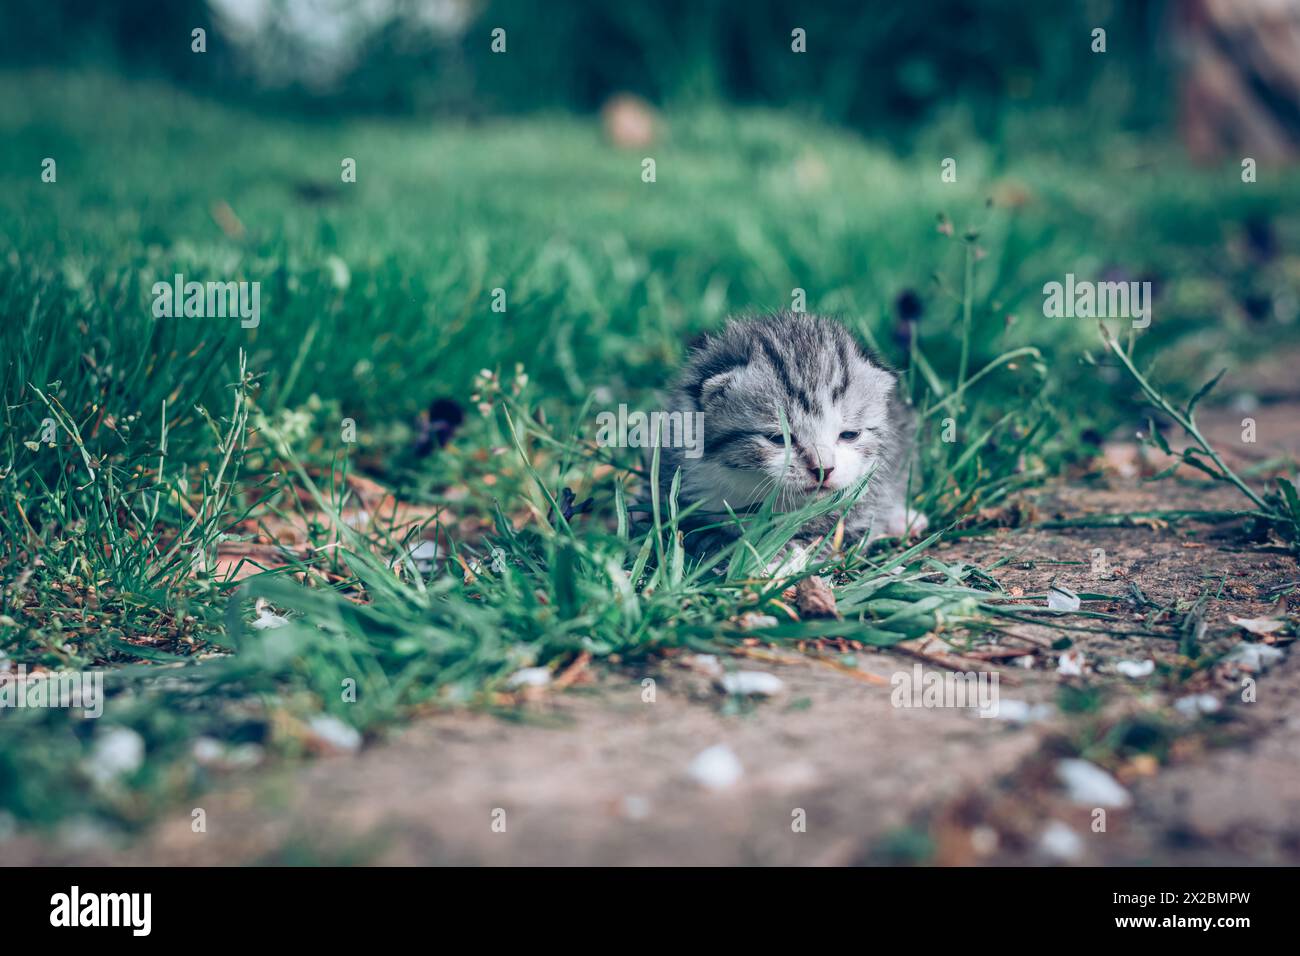 lovely newborn cat in green grass outdoors Stock Photo